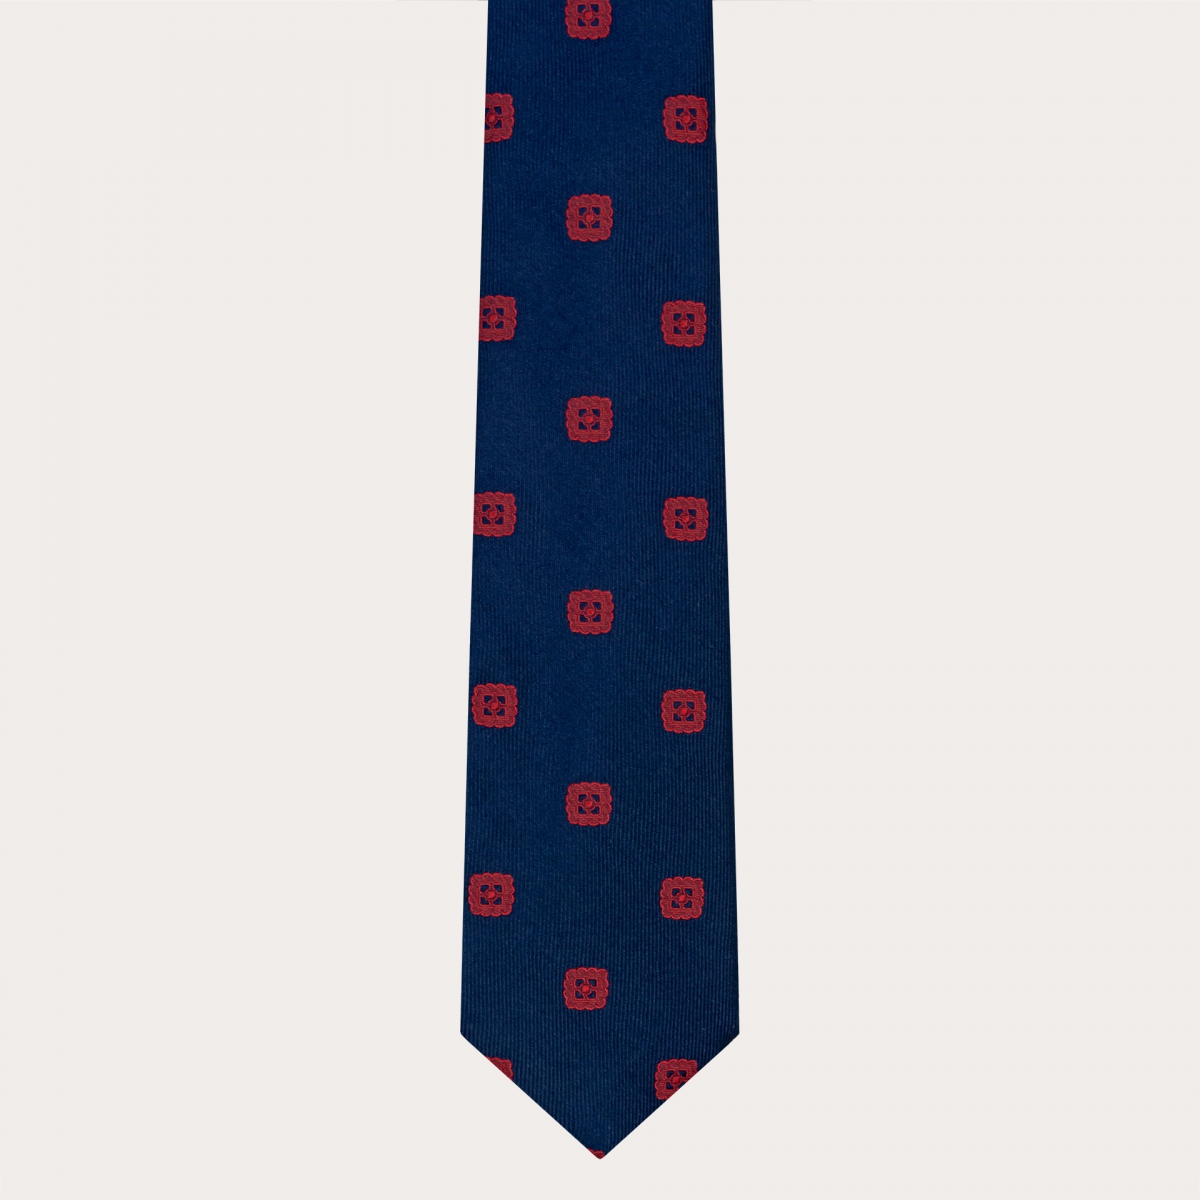 Elegante cravatta in seta jacquard, blu con fregi rossi